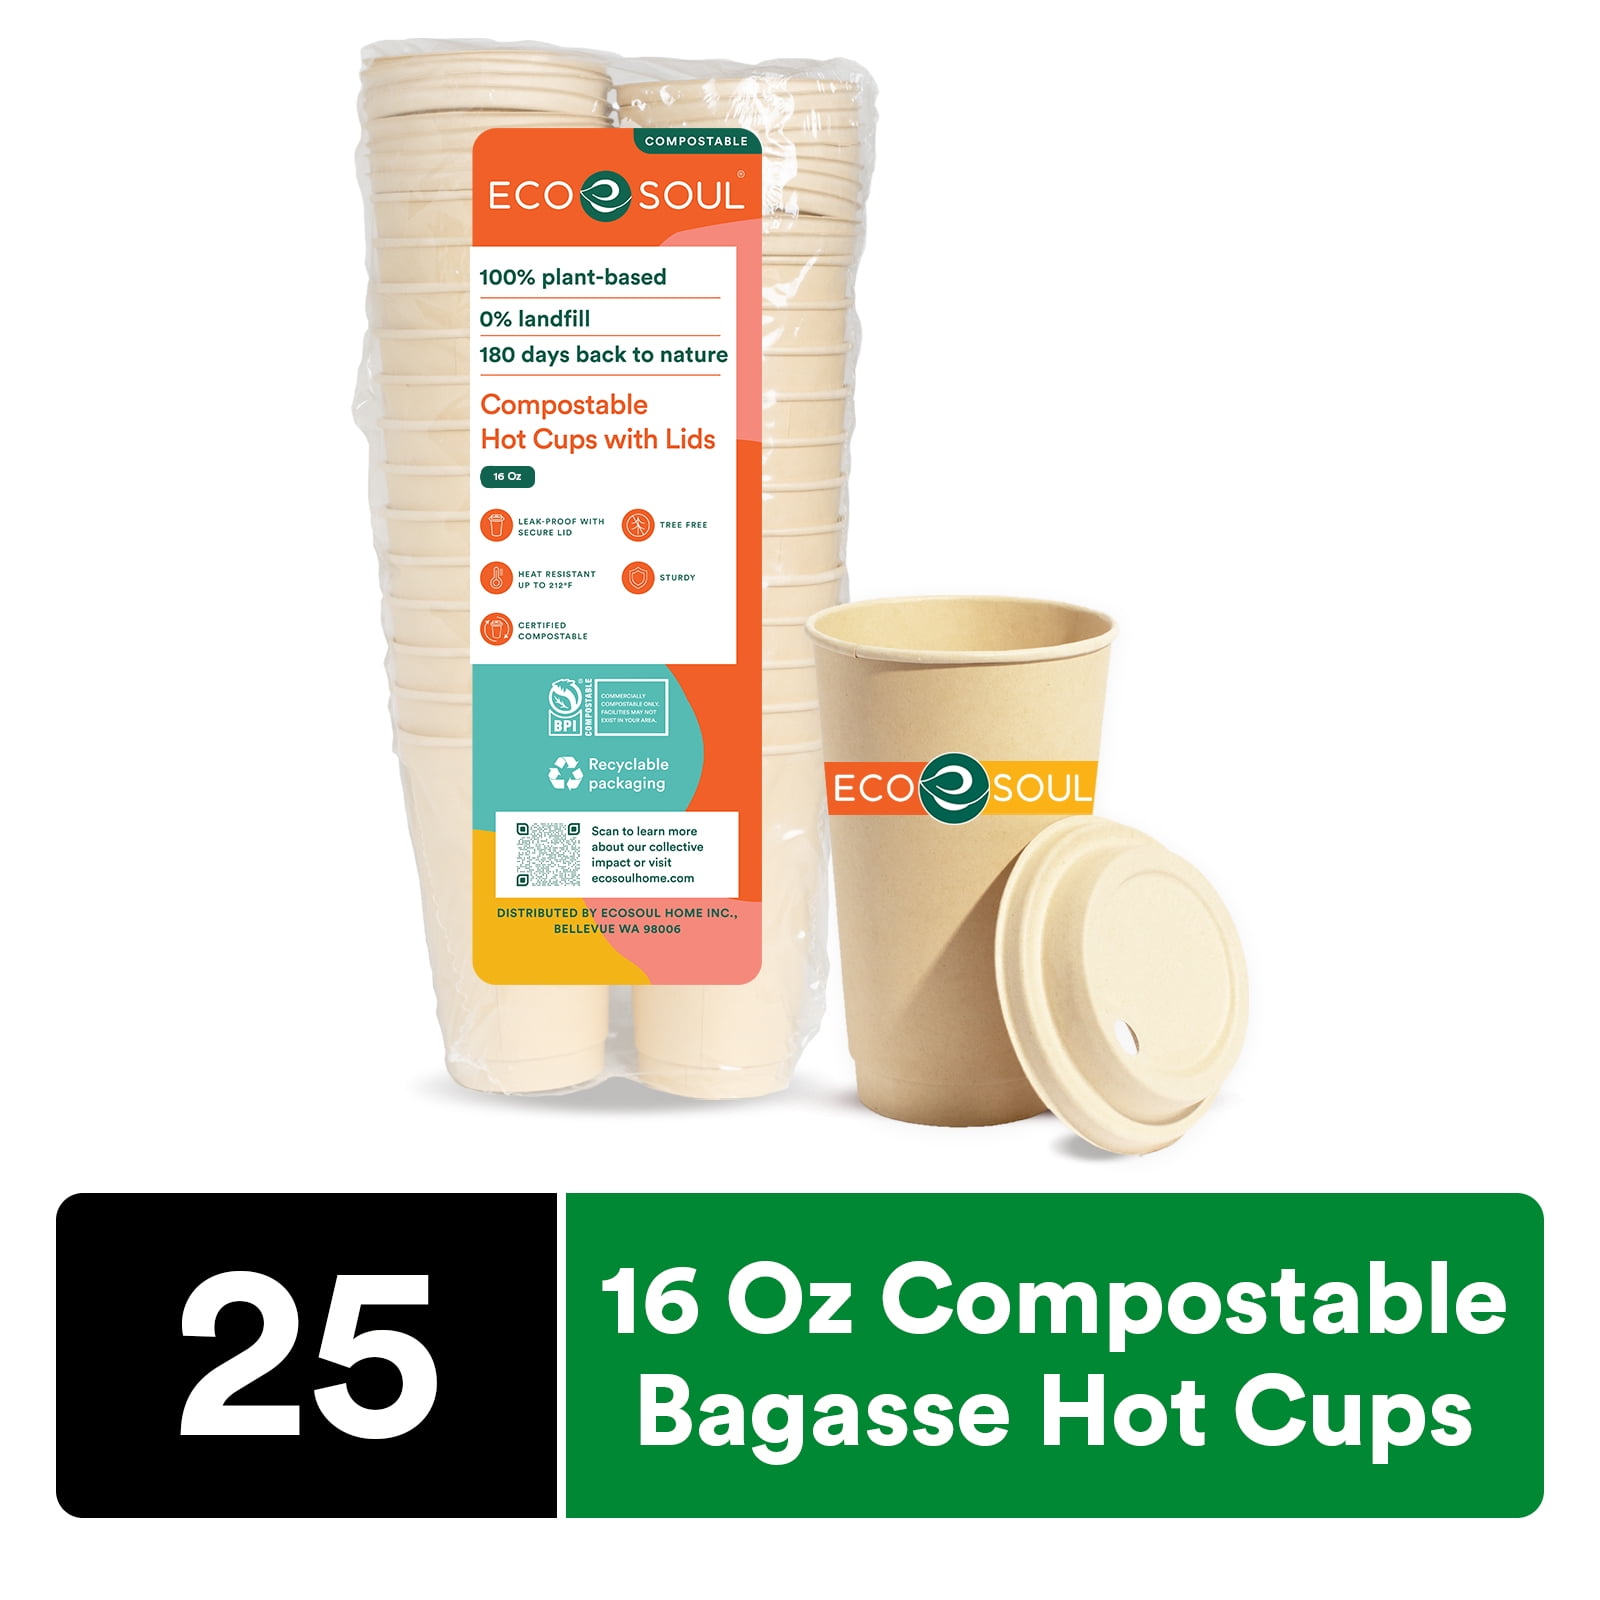 Chinet Comfort Cups & Lids, 16 Ounce - 80 cups & lids